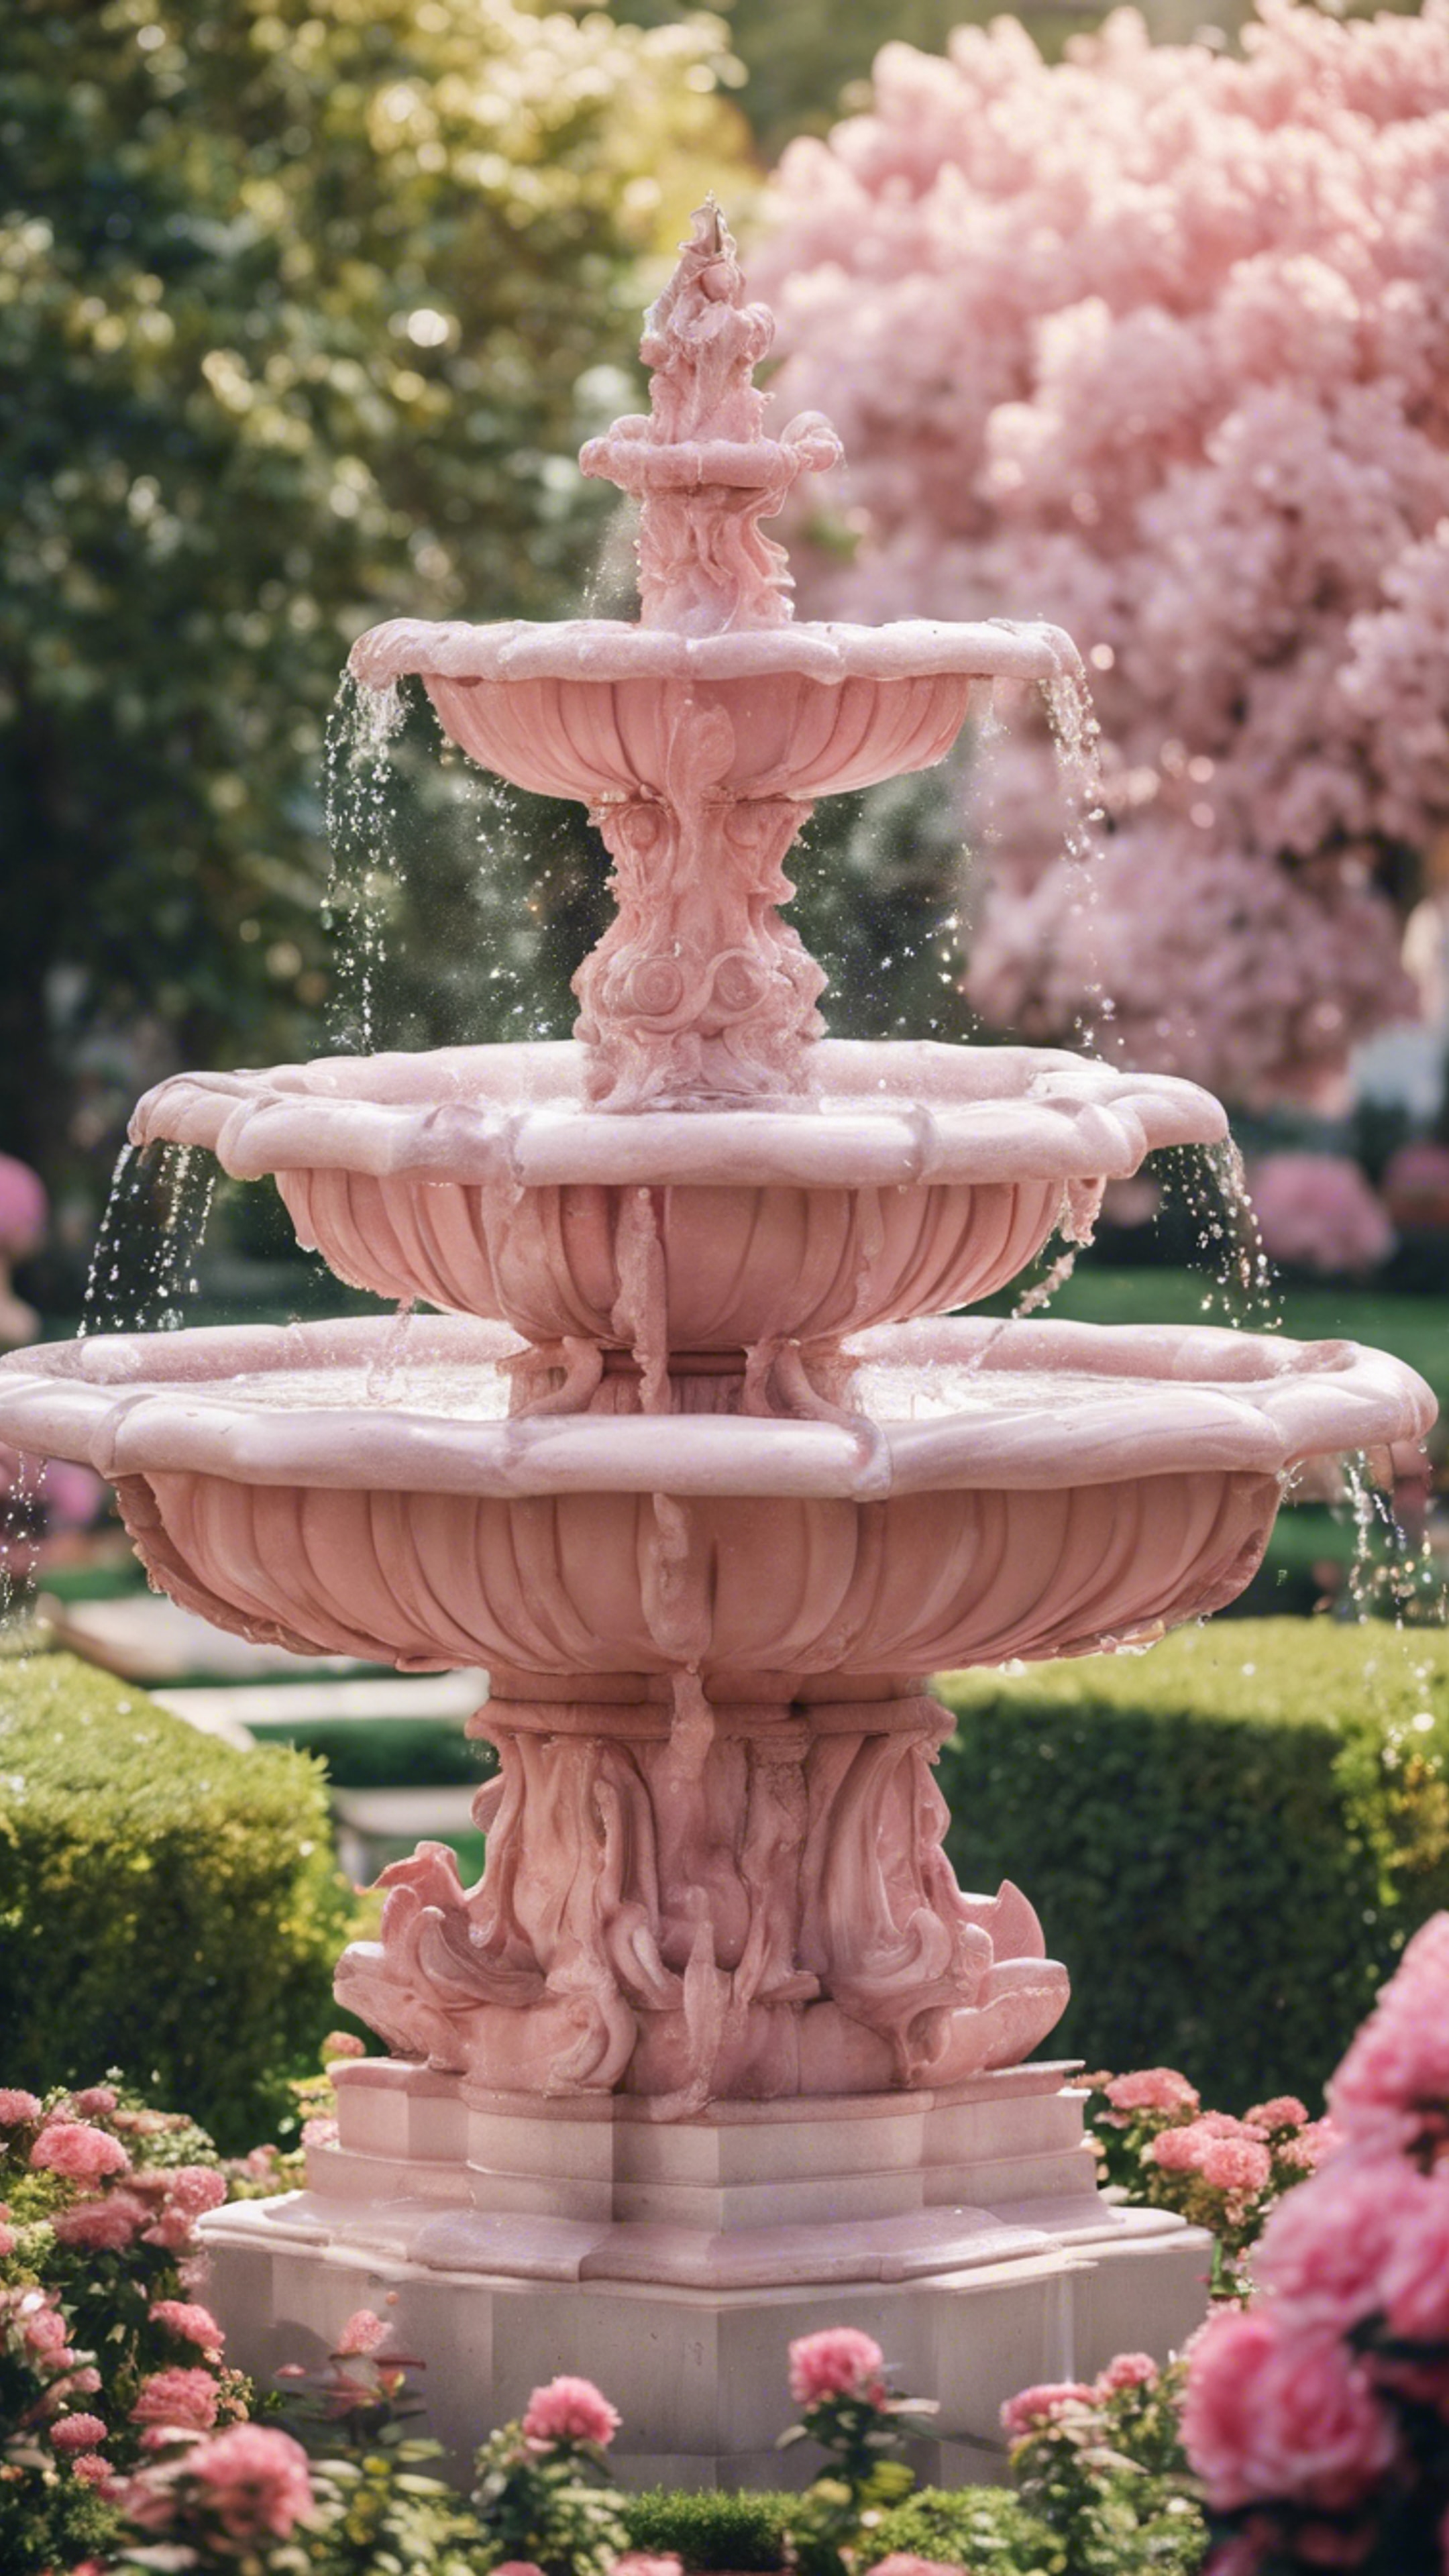 A fountain made of pink marble in an elegant flower garden. טפט[73b566b49d564d04a87c]